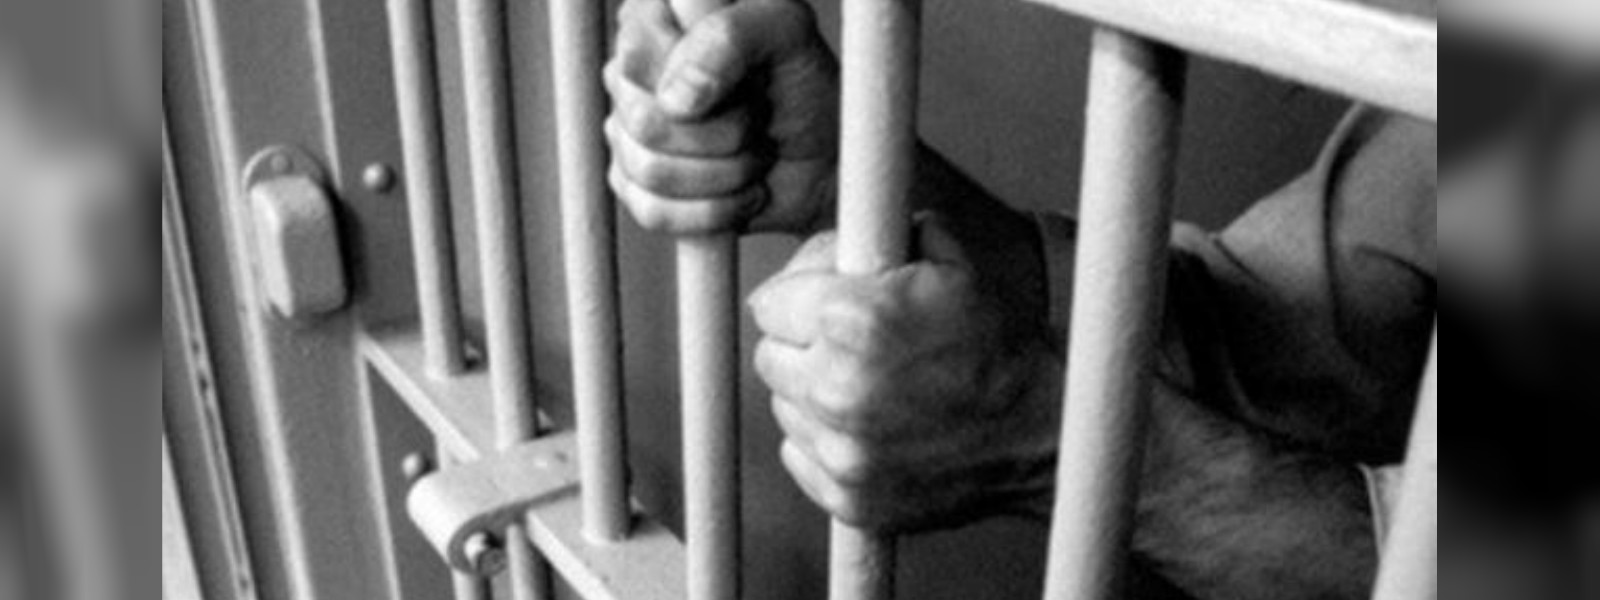 Female inmate found dead in Welikada prison 